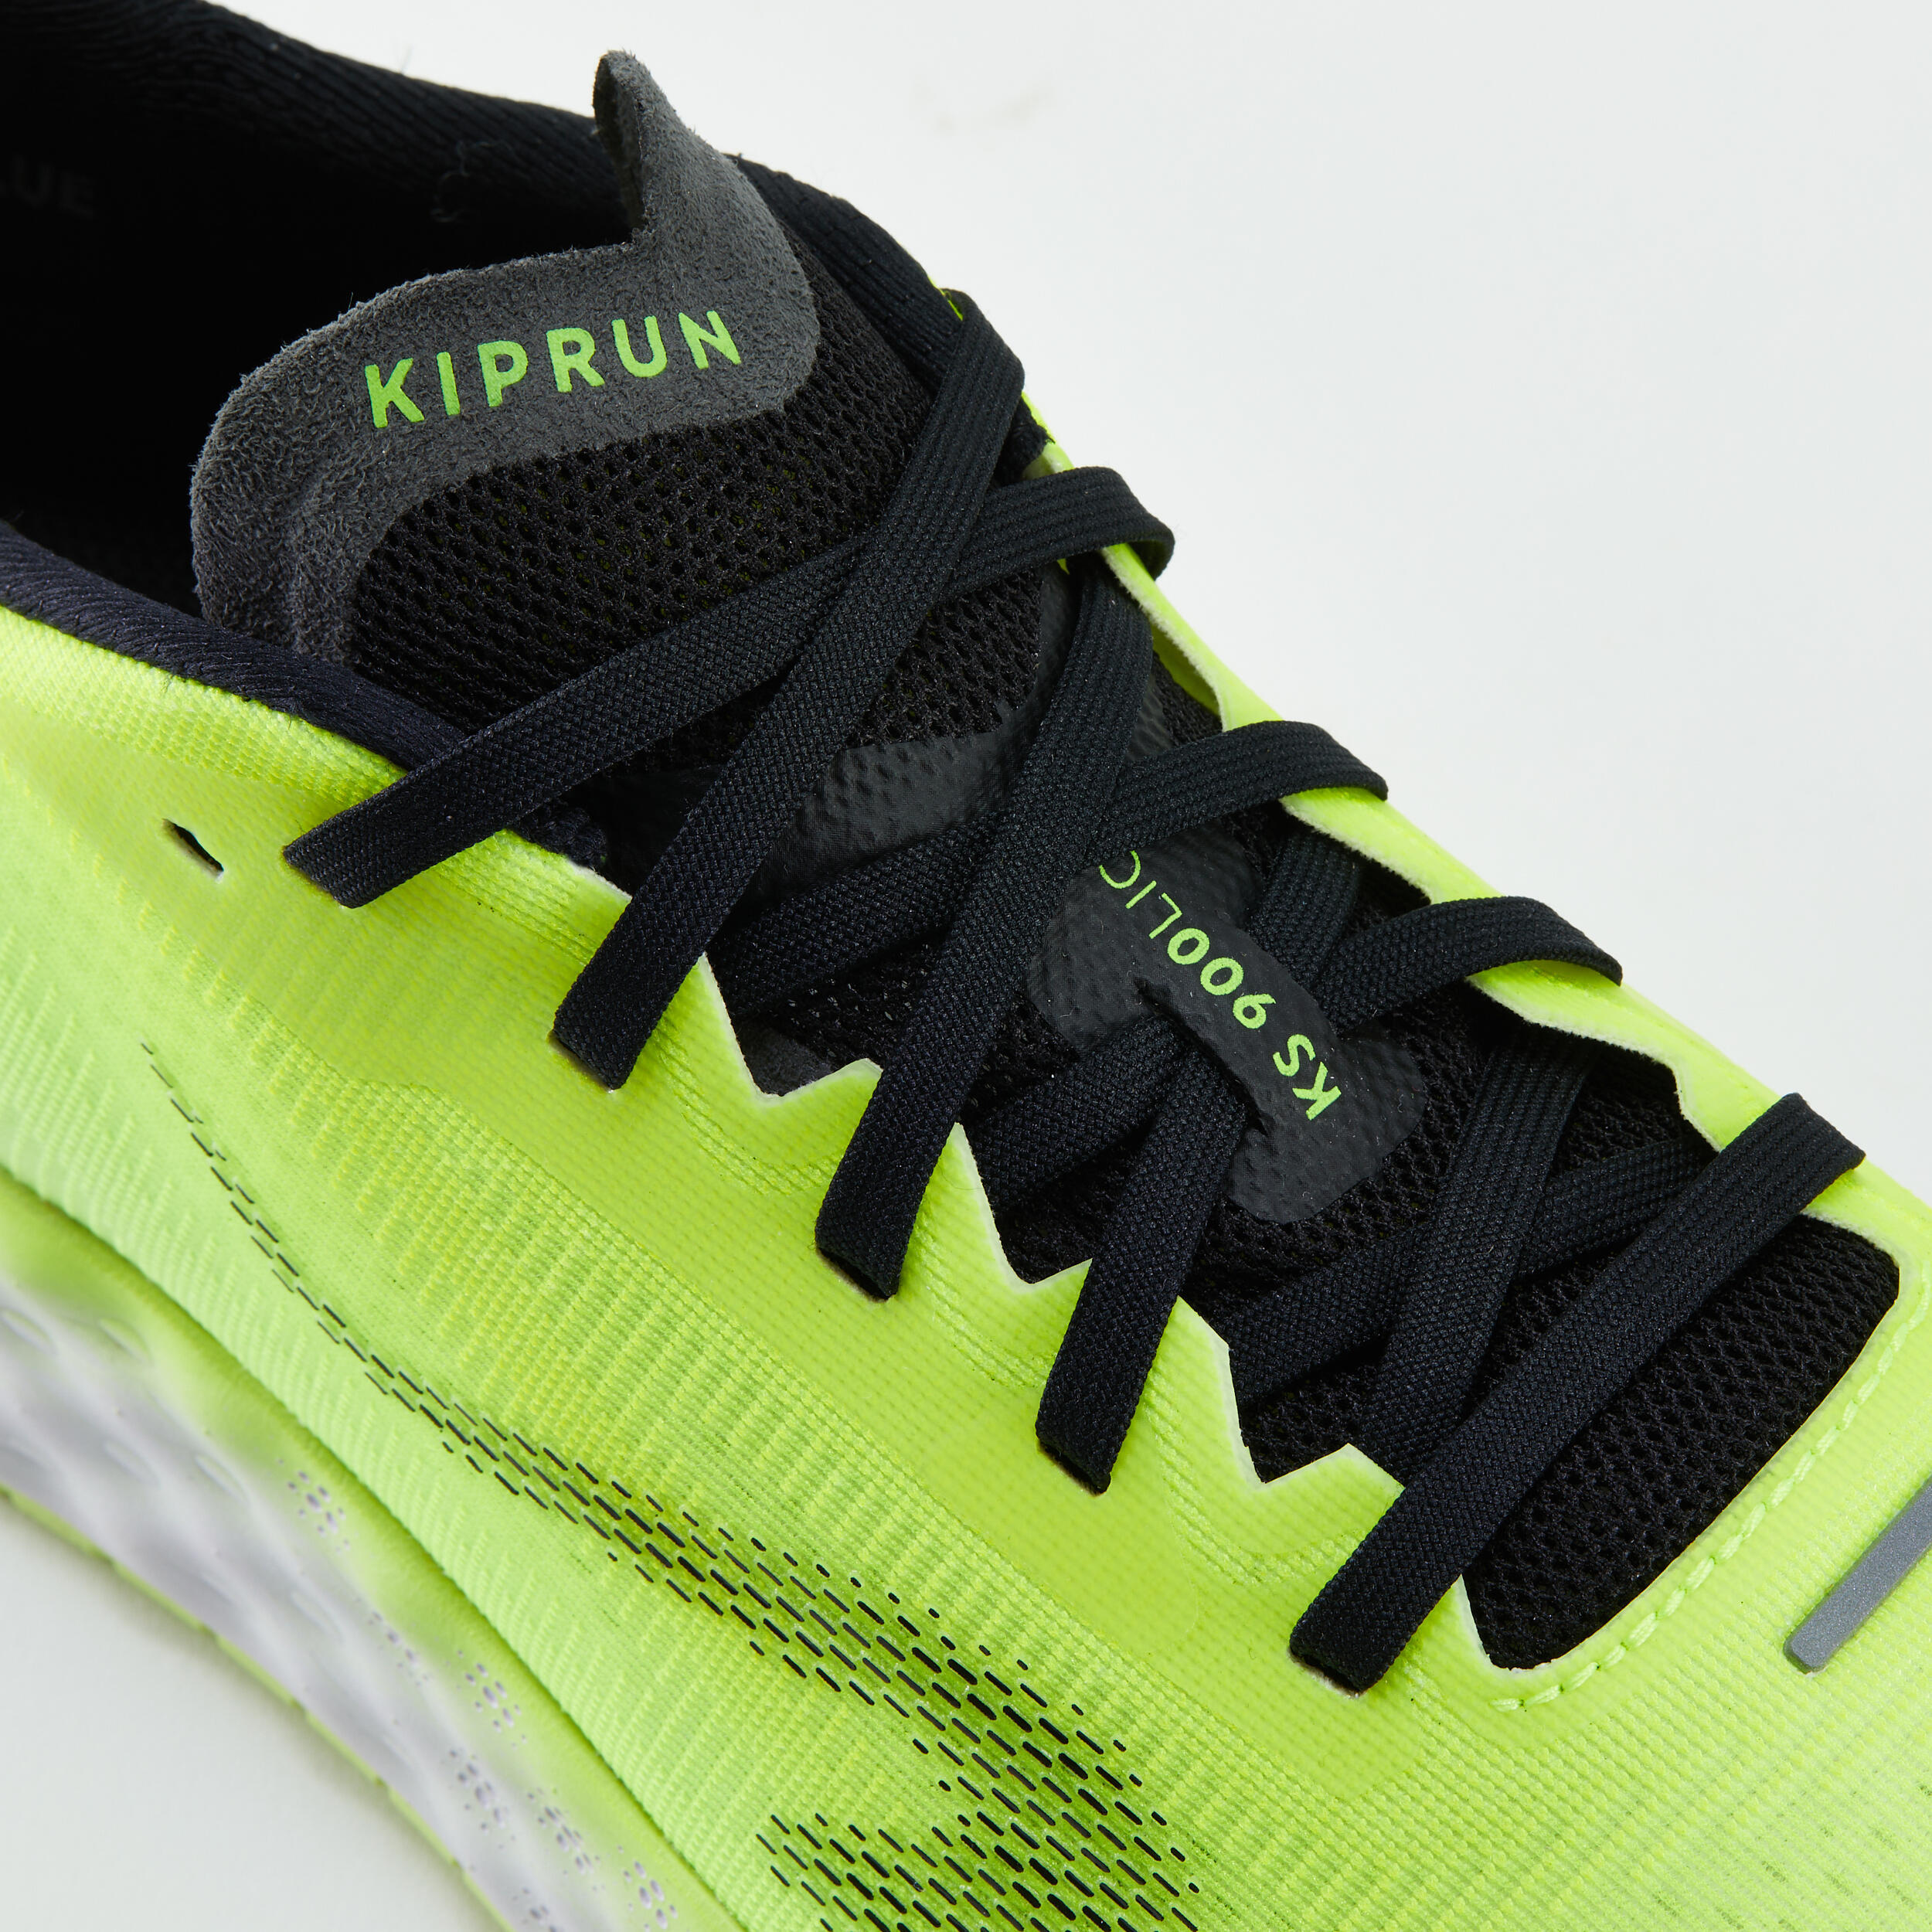 KIPRUN KS900 men's running shoes - light yellow 6/8